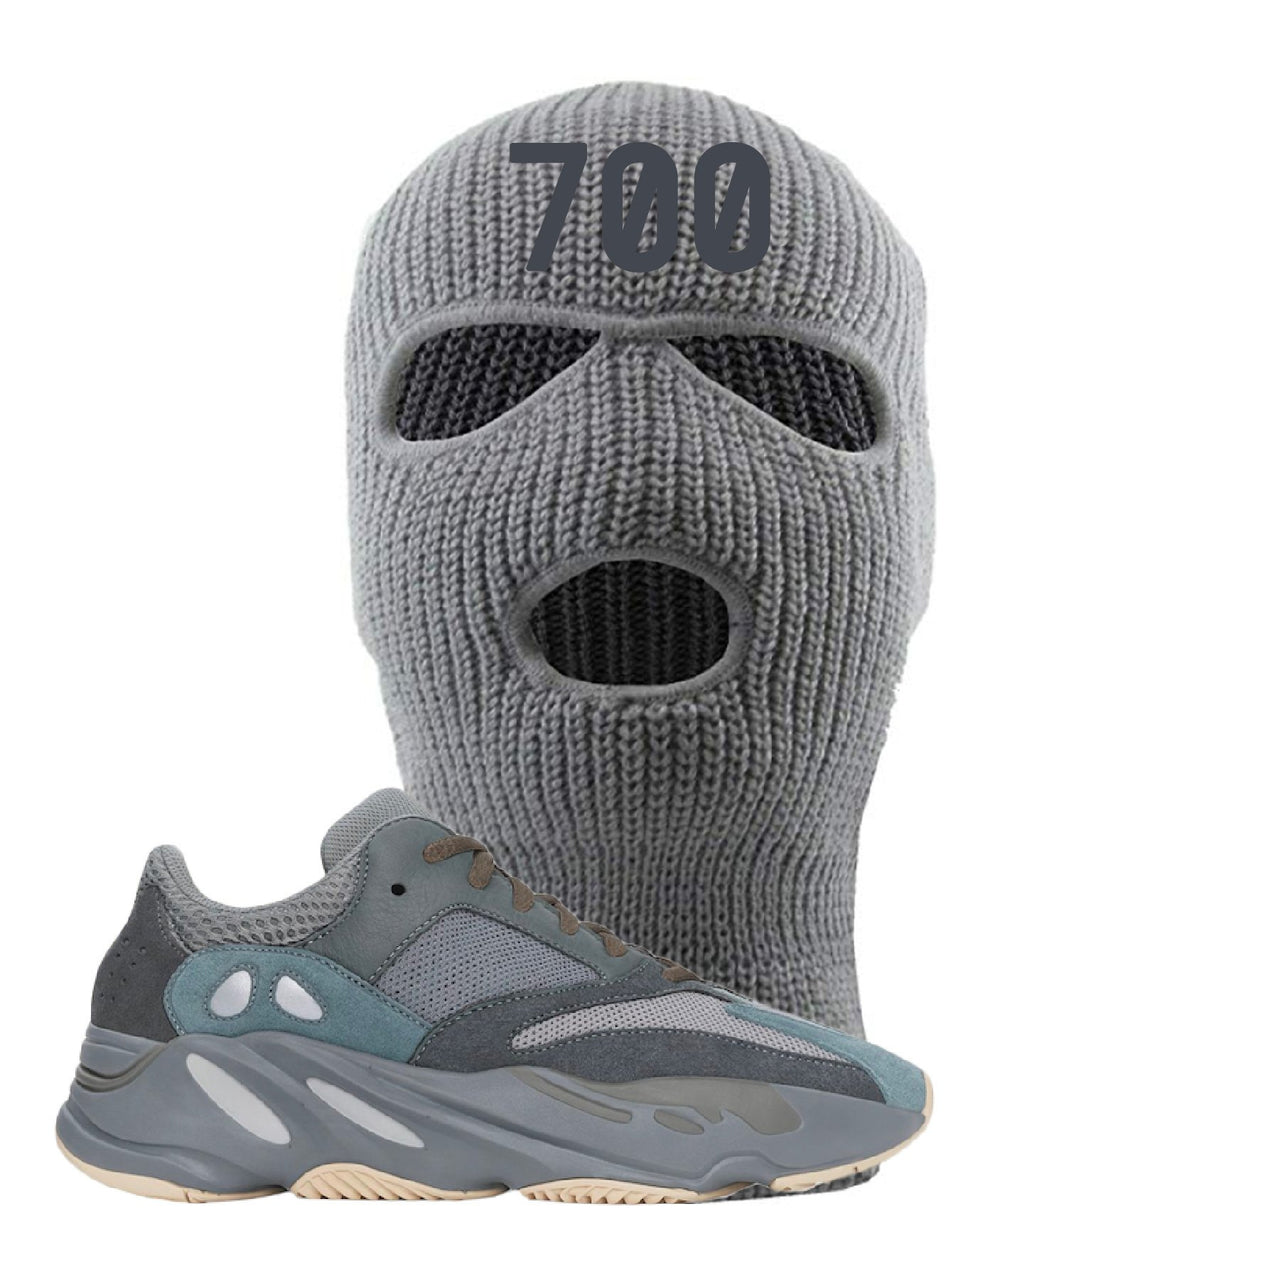 Yeezy Boost 700 Teal Blue 700 Light Gray Sneaker Hook Up Ski Mask